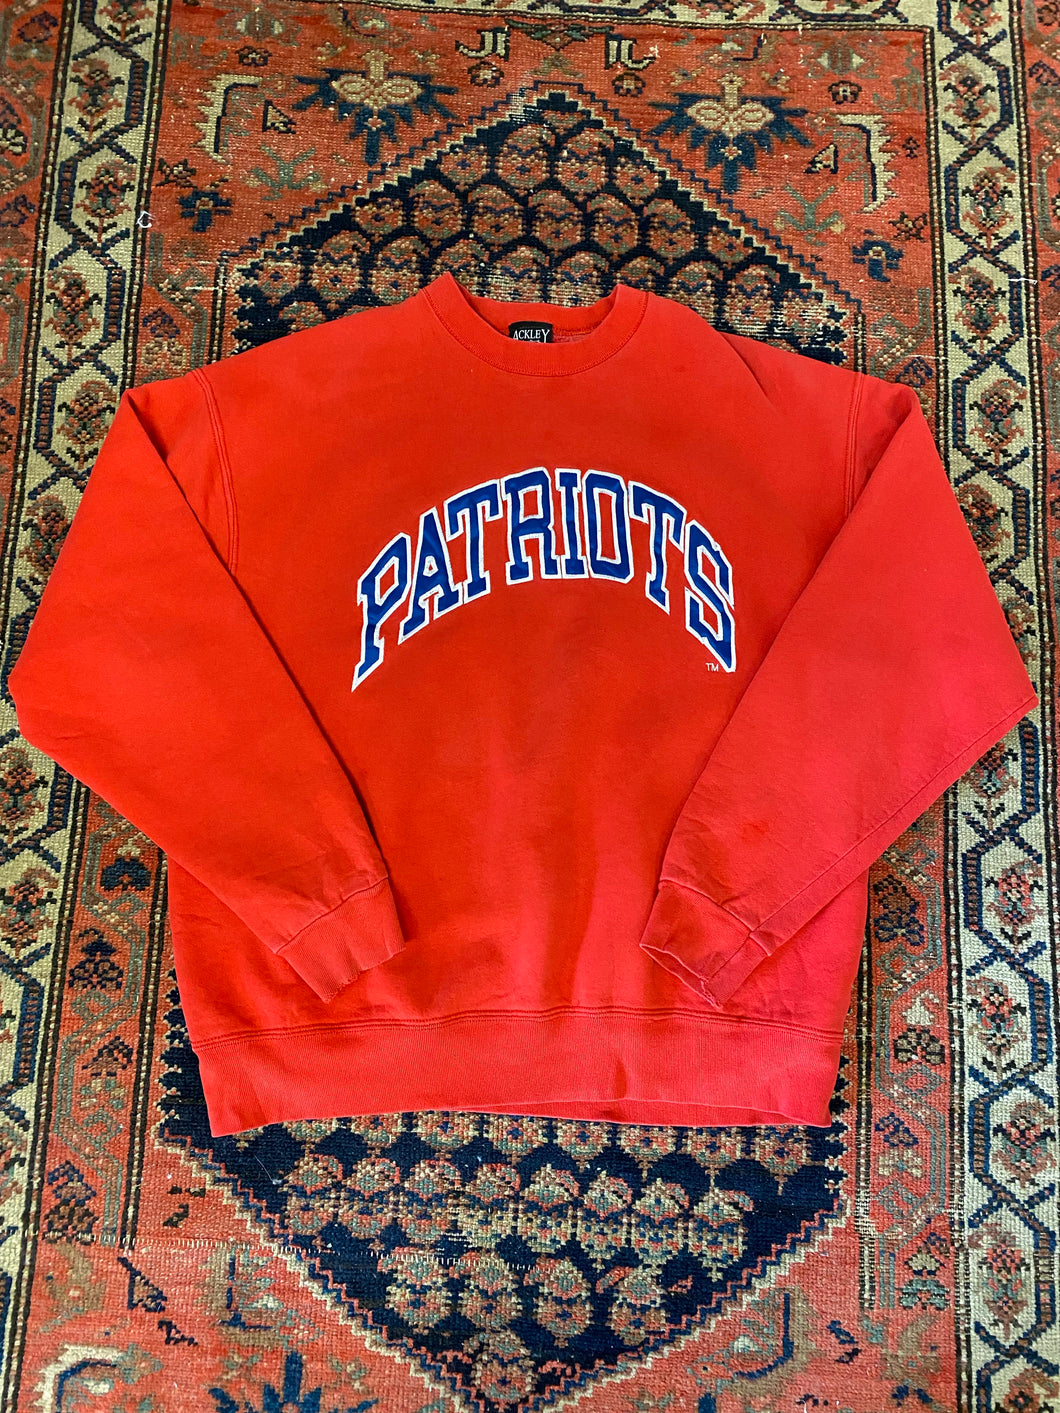 90s Embroidered Patriots Crewneck - M/L